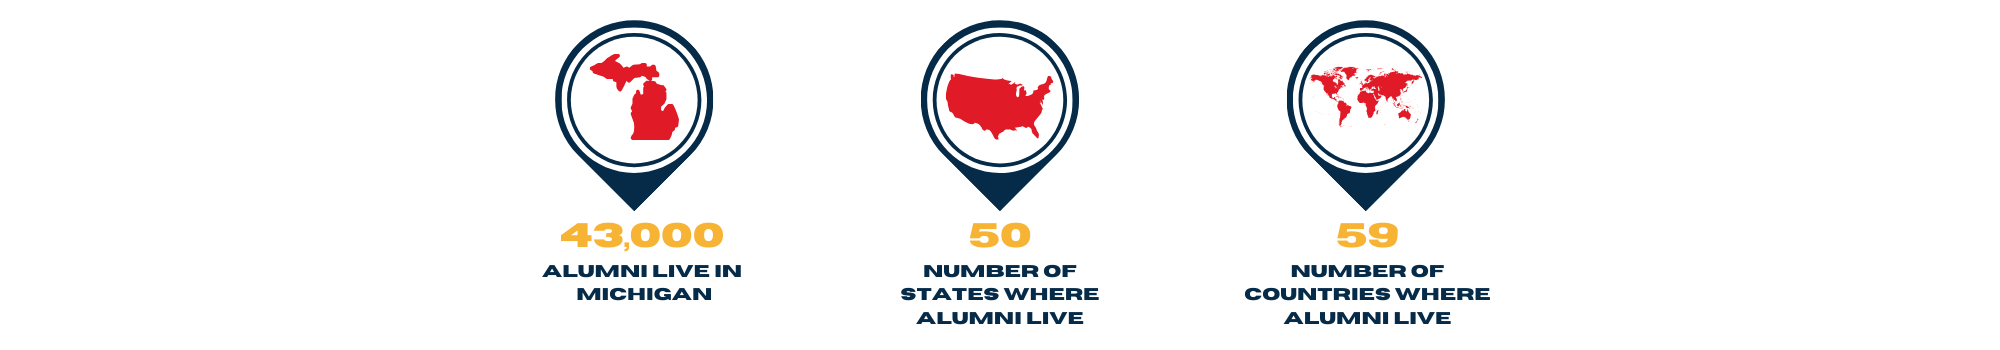 43,000 alumni live in MI, alumni live in all 50 states, alumni live in 59 countries